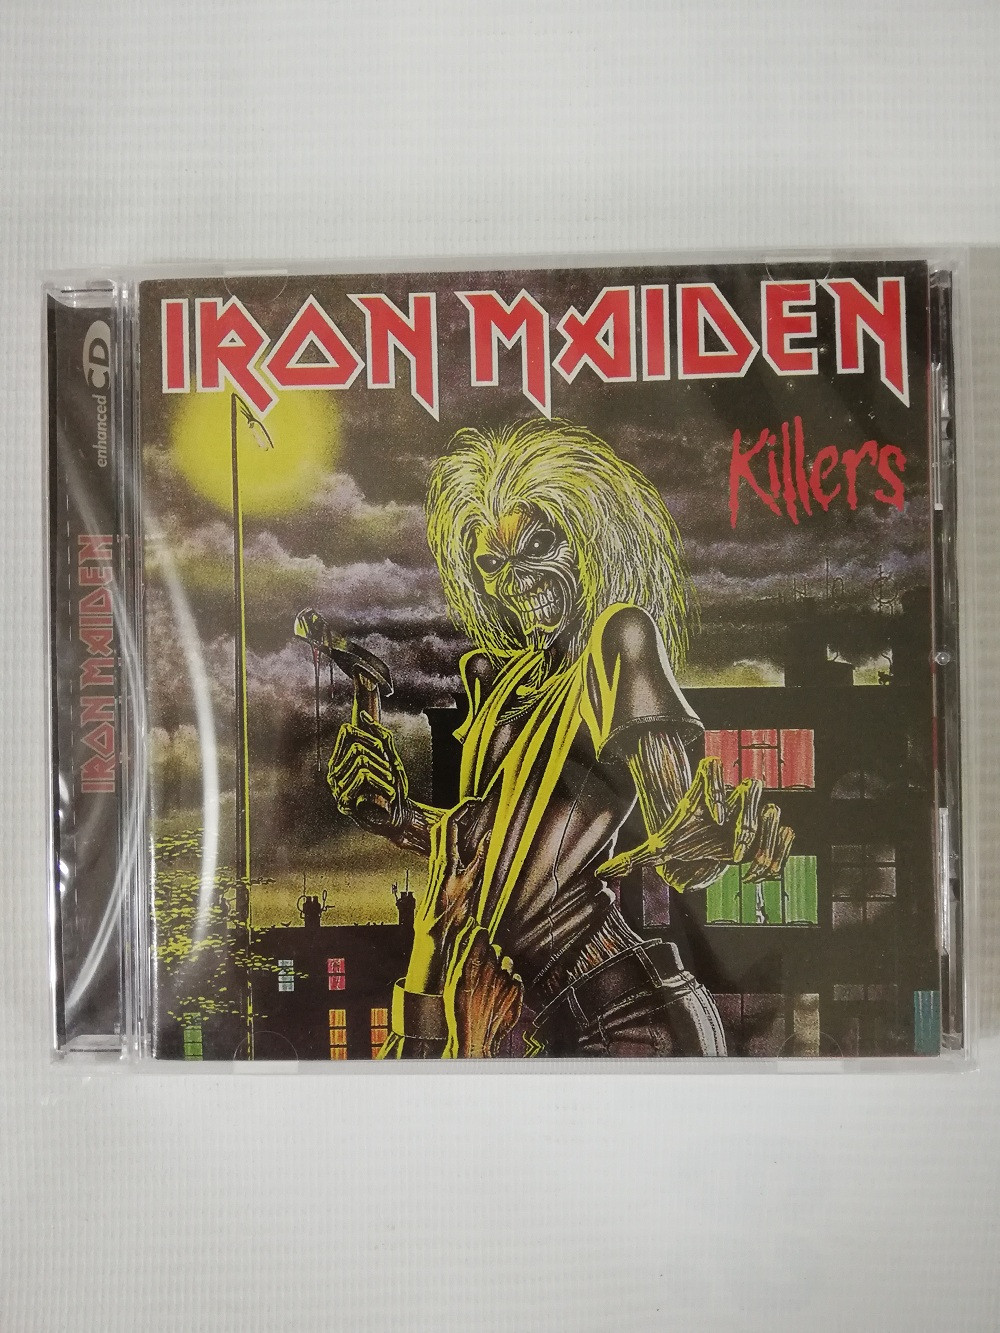 Imagen CD IRON MAIDEN - KILLERS 1